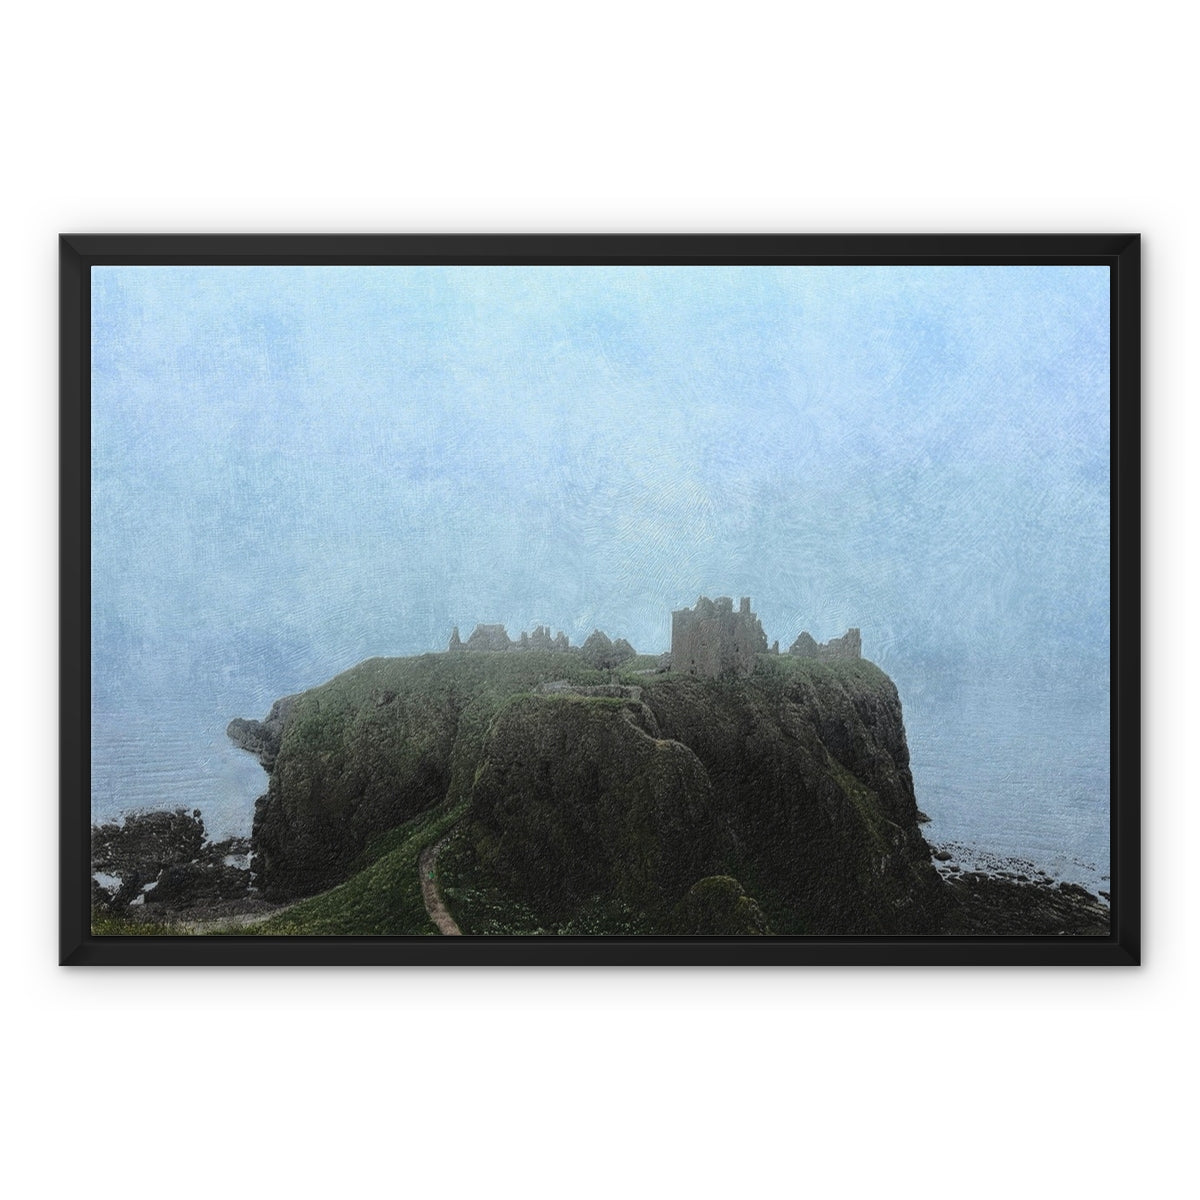 Dunnottar Castle Mist Painting | Framed Canvas From Scotland-Floating Framed Canvas Prints-Historic & Iconic Scotland Art Gallery-24"x18"-Black Frame-Paintings, Prints, Homeware, Art Gifts From Scotland By Scottish Artist Kevin Hunter